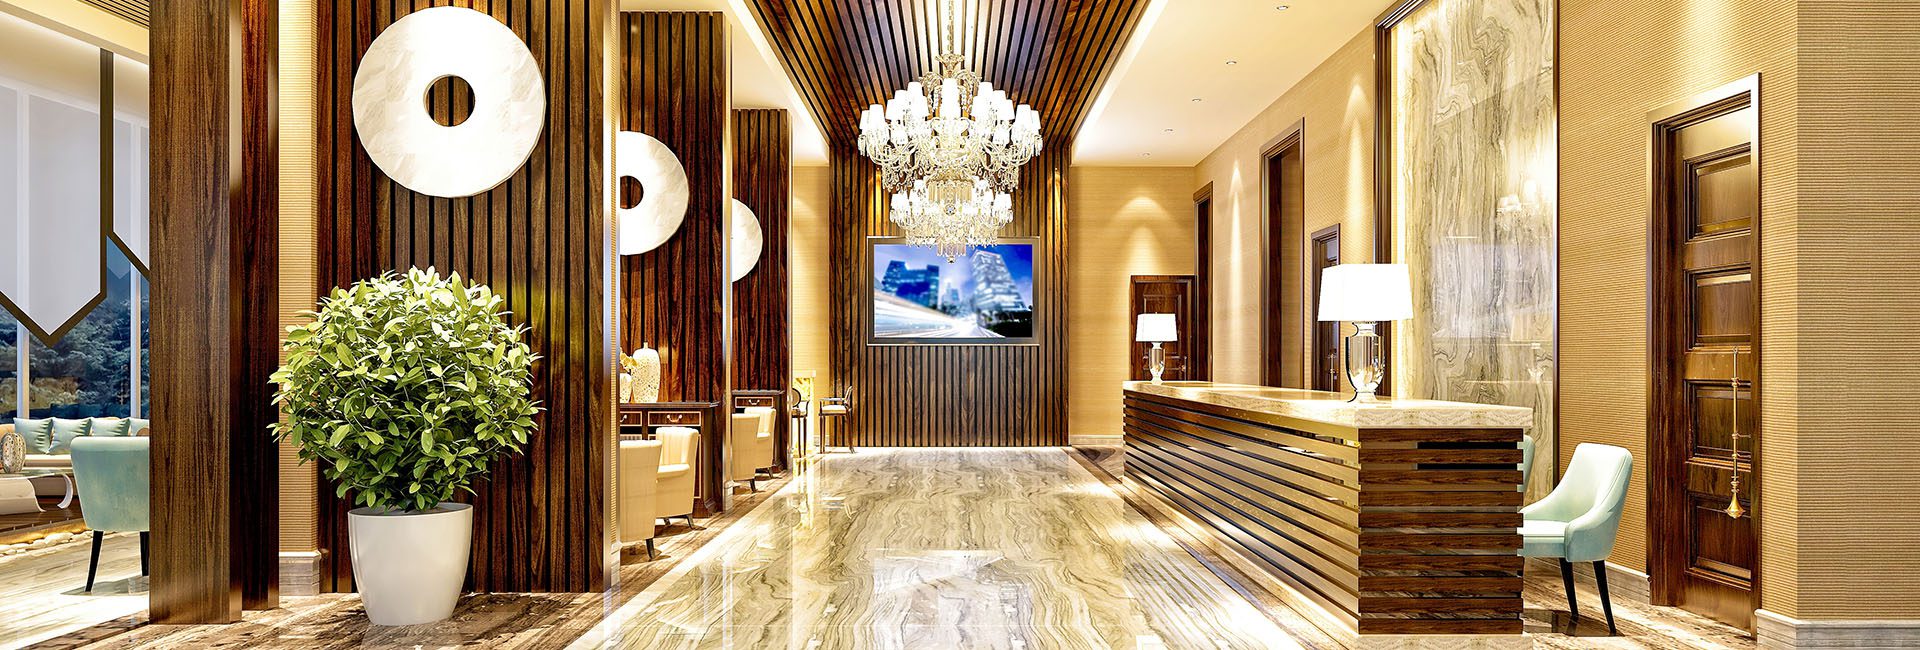 3d render of hotel reception